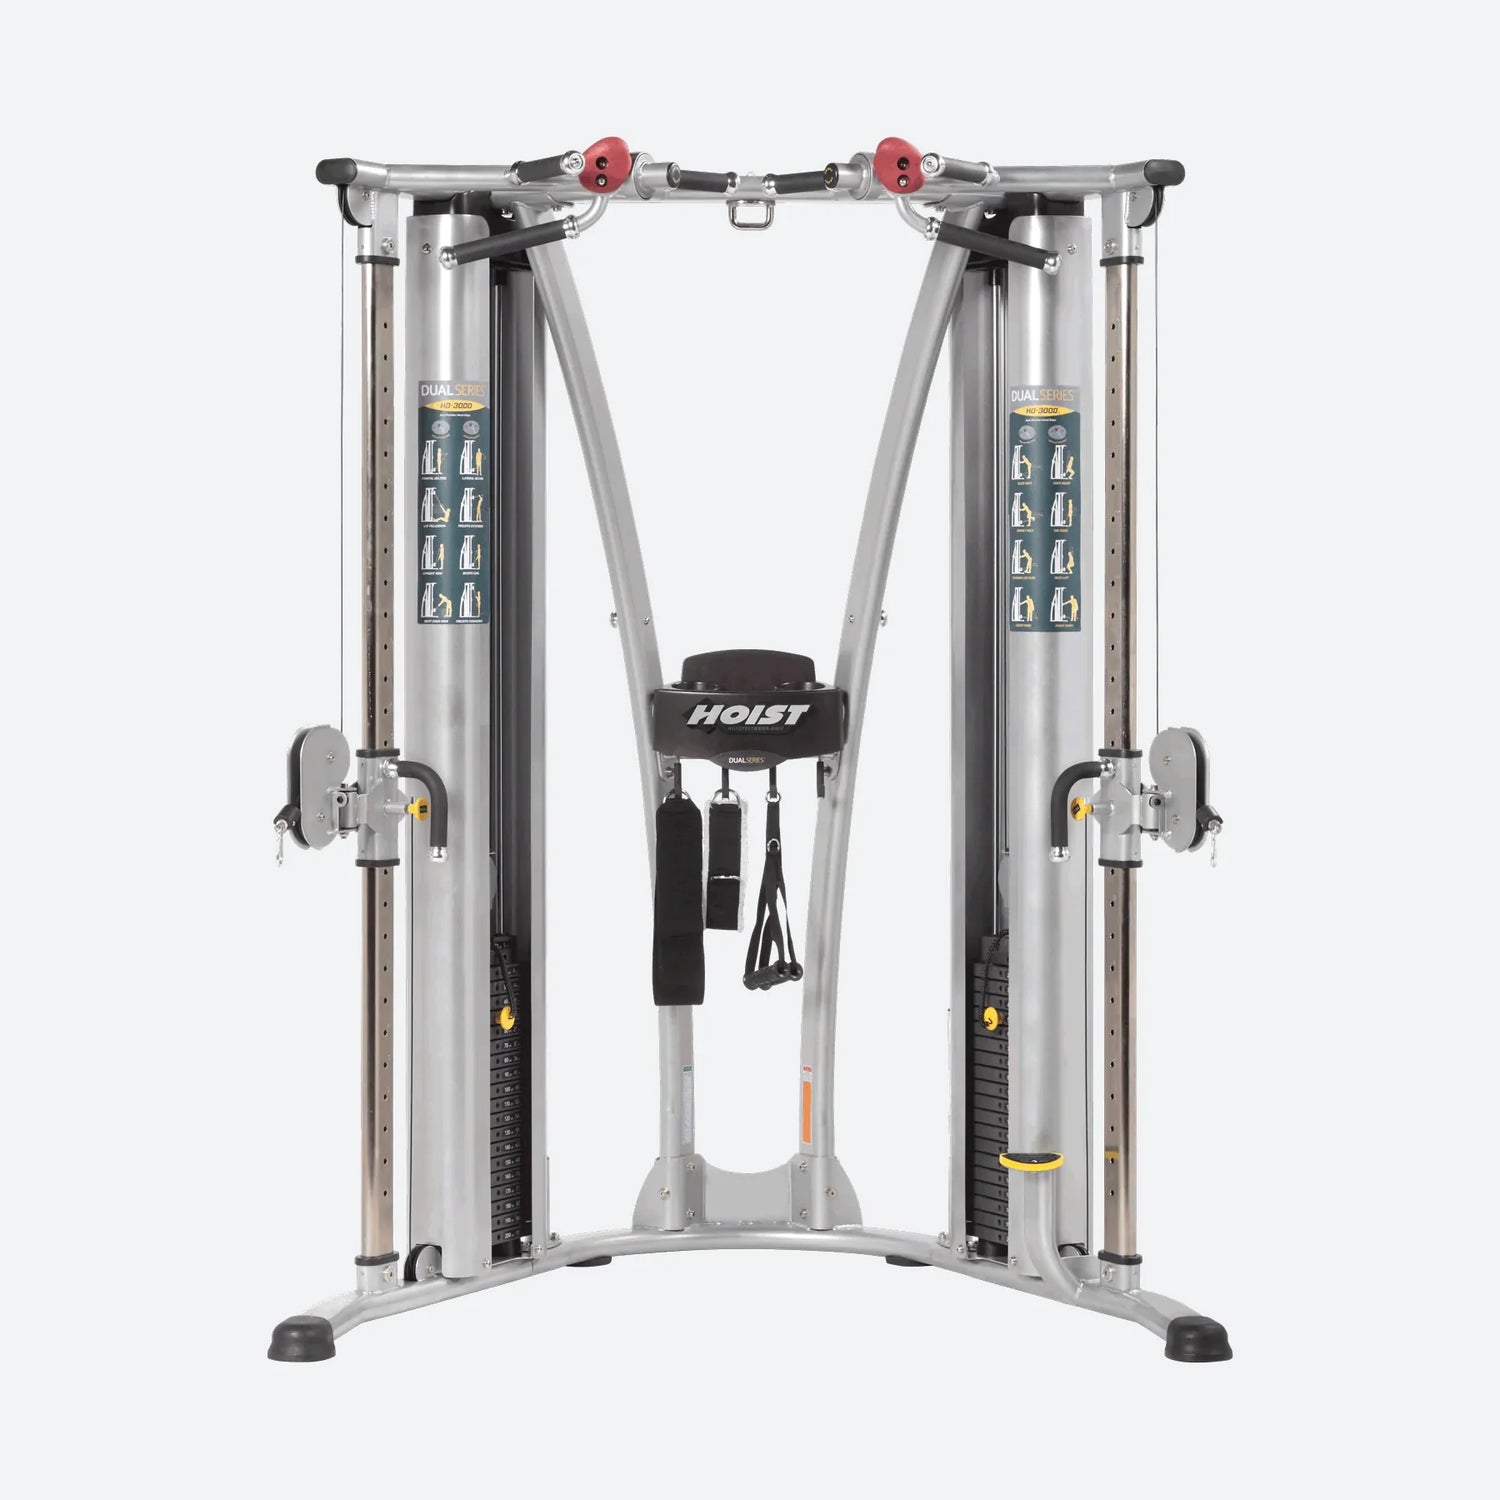 Seated dips weight training machine - RPL-5201 - Hoist Fitness